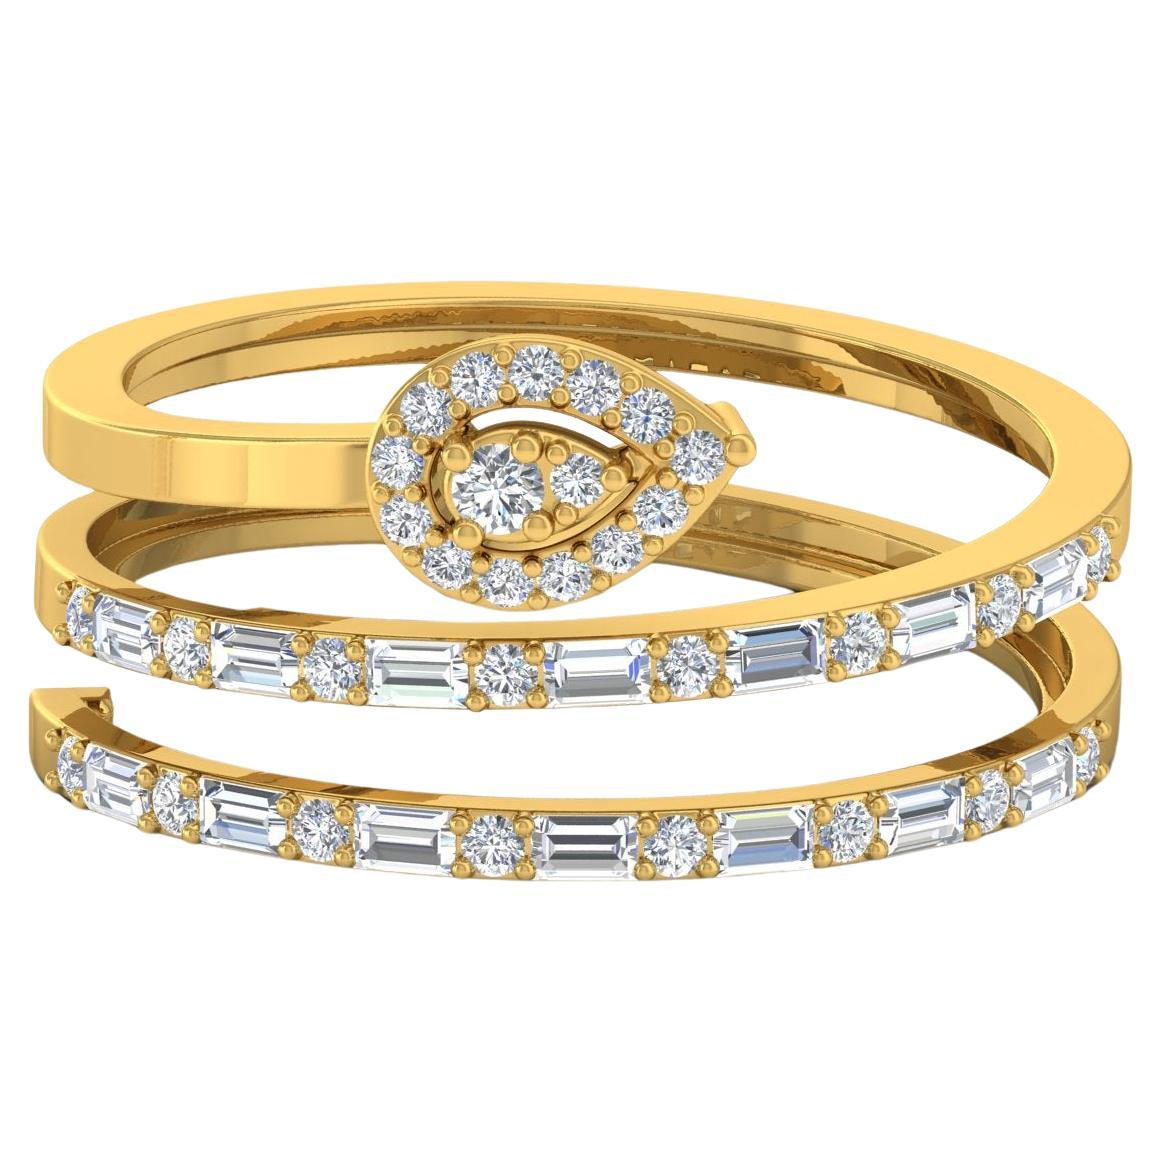 SI Clarity HI Color Baguette Diamond Spiral Ring 18 Karat Yellow Gold Jewelry